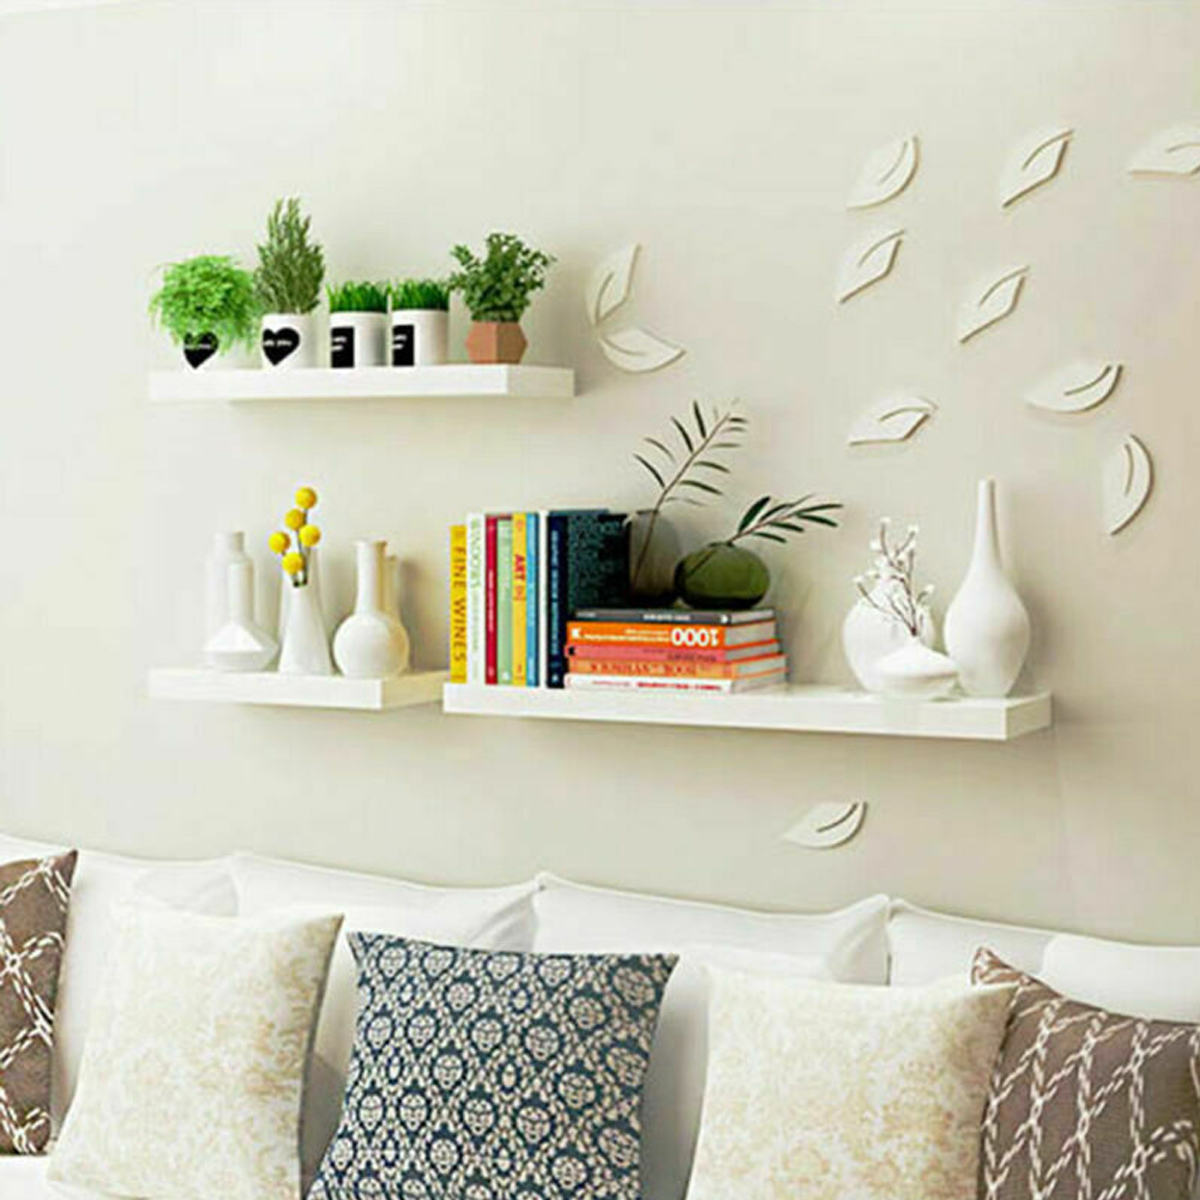 4-PcsSet-DIY-Wall-Shelves-Shelf-Floating-Display-Decor-Home-Wood-Wall-Mounted-1841567-11